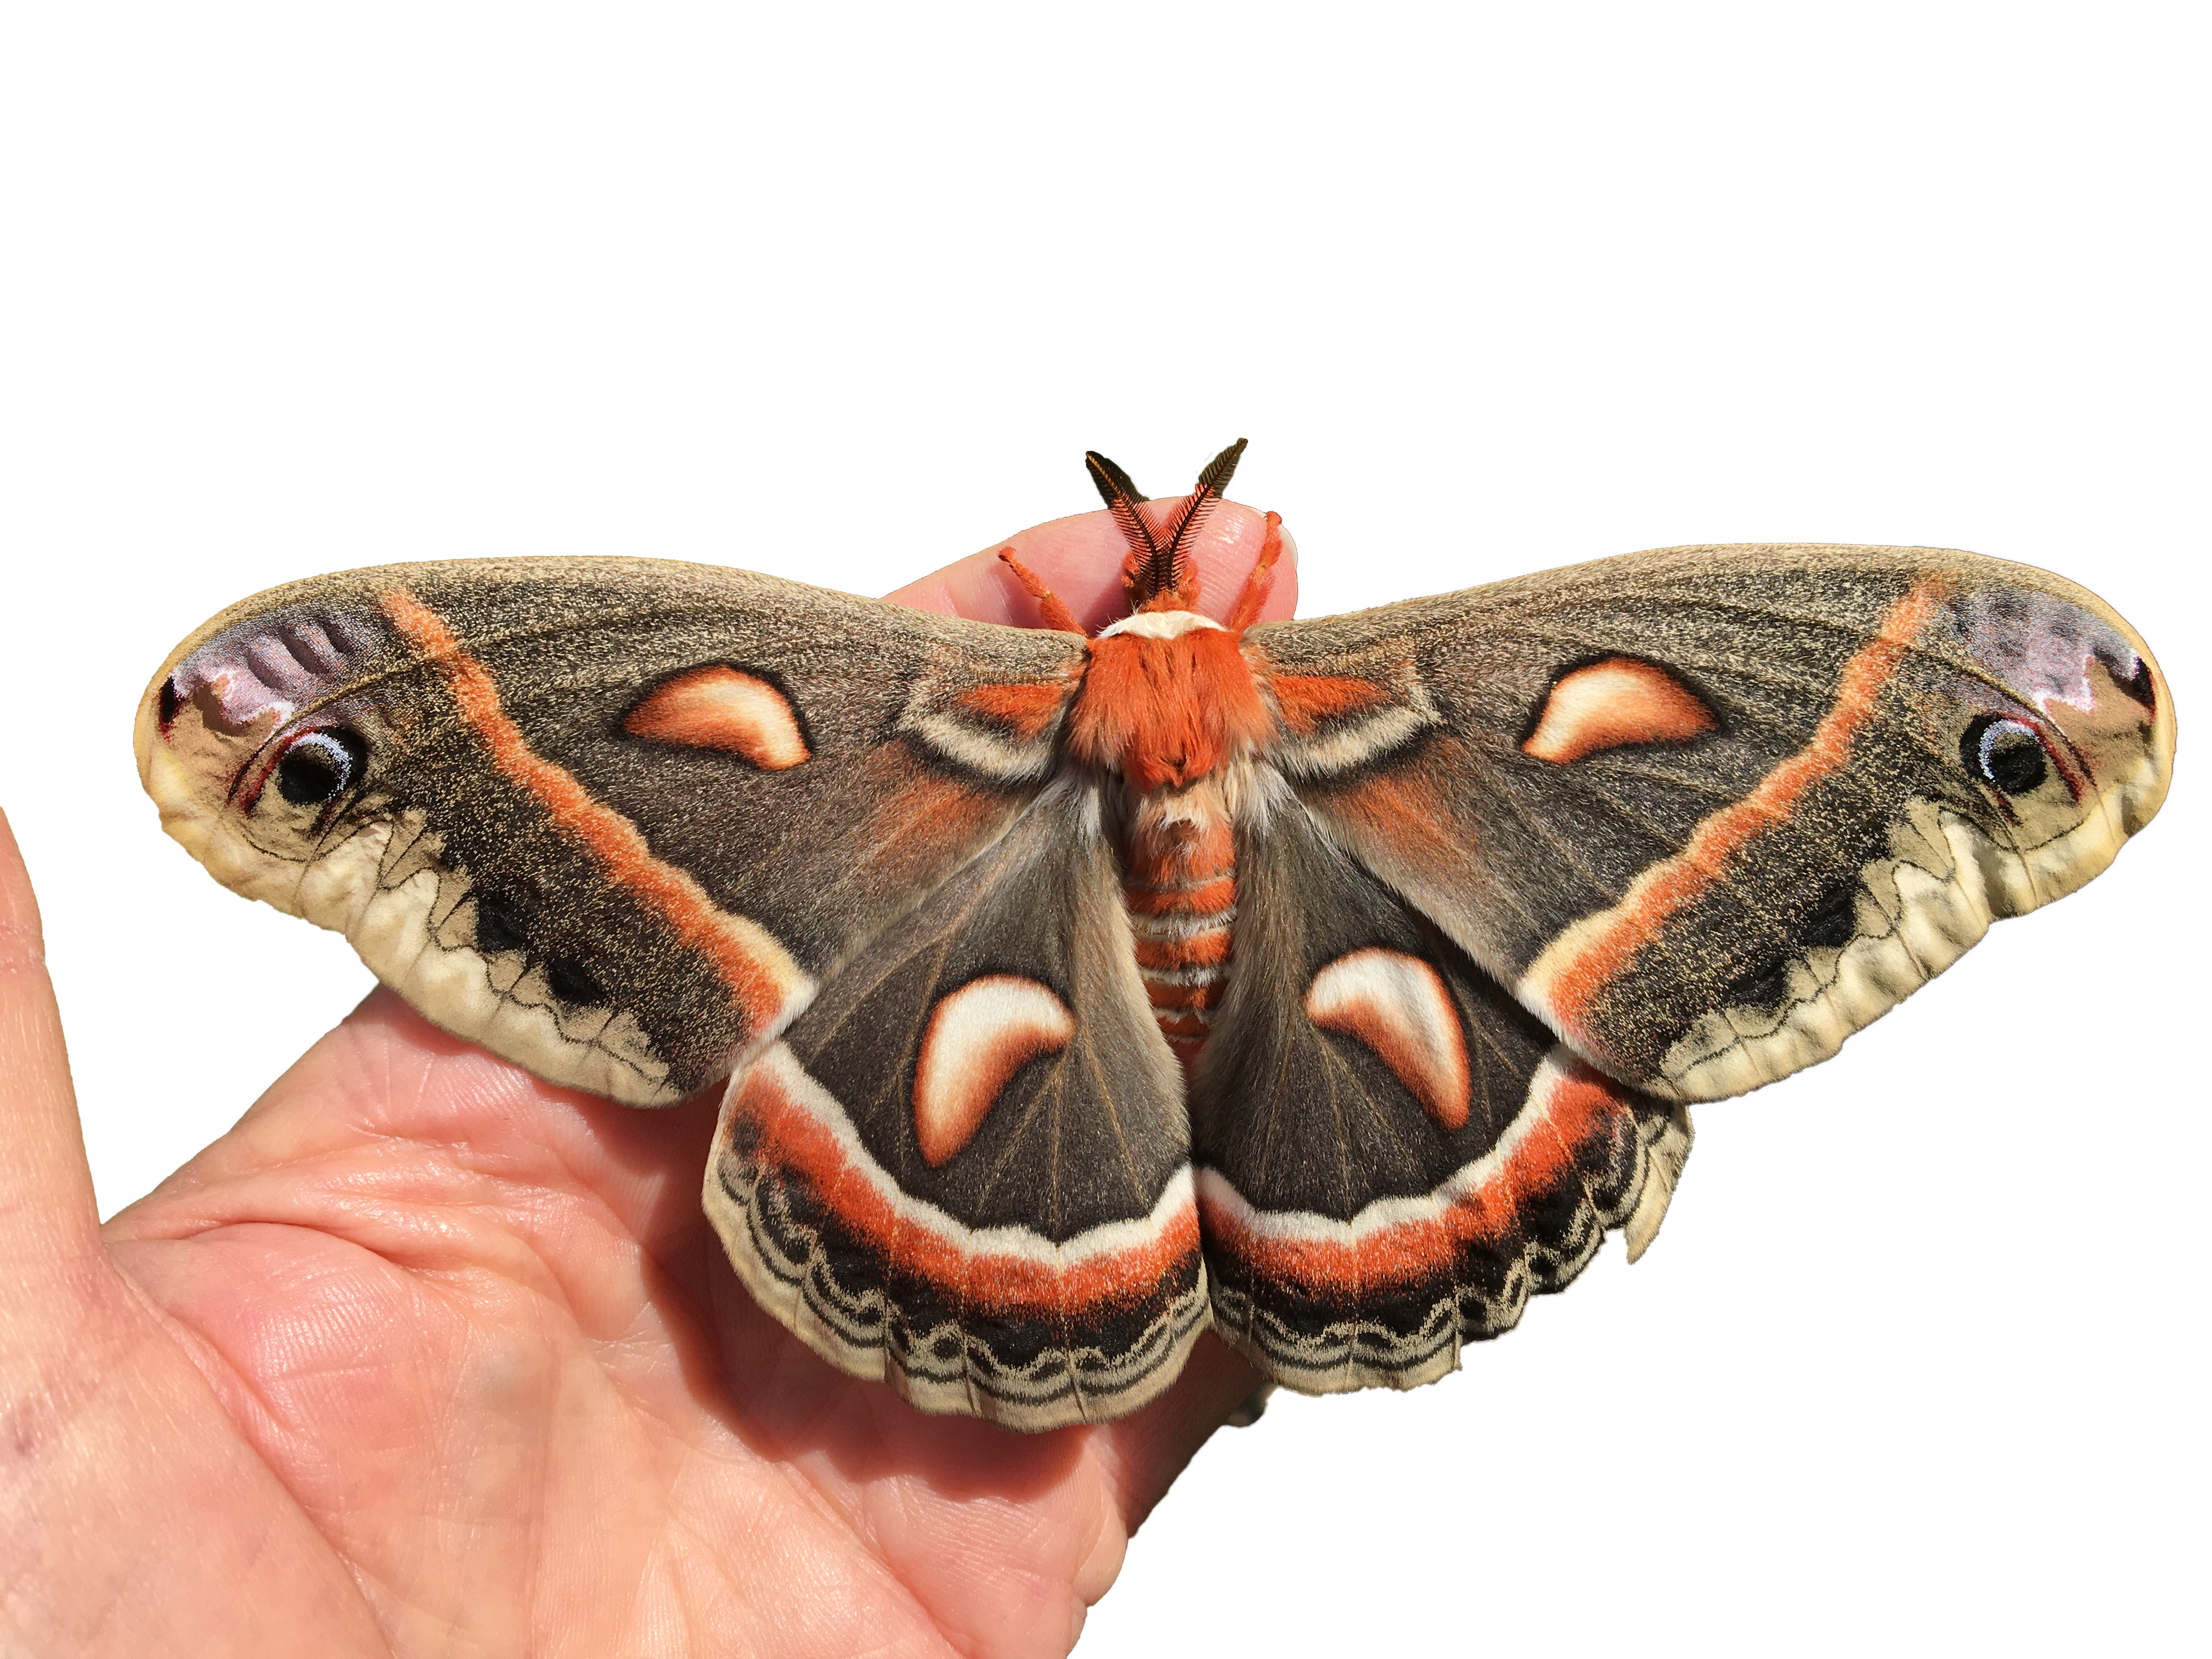 A cecropia moth perches on a person's hand.